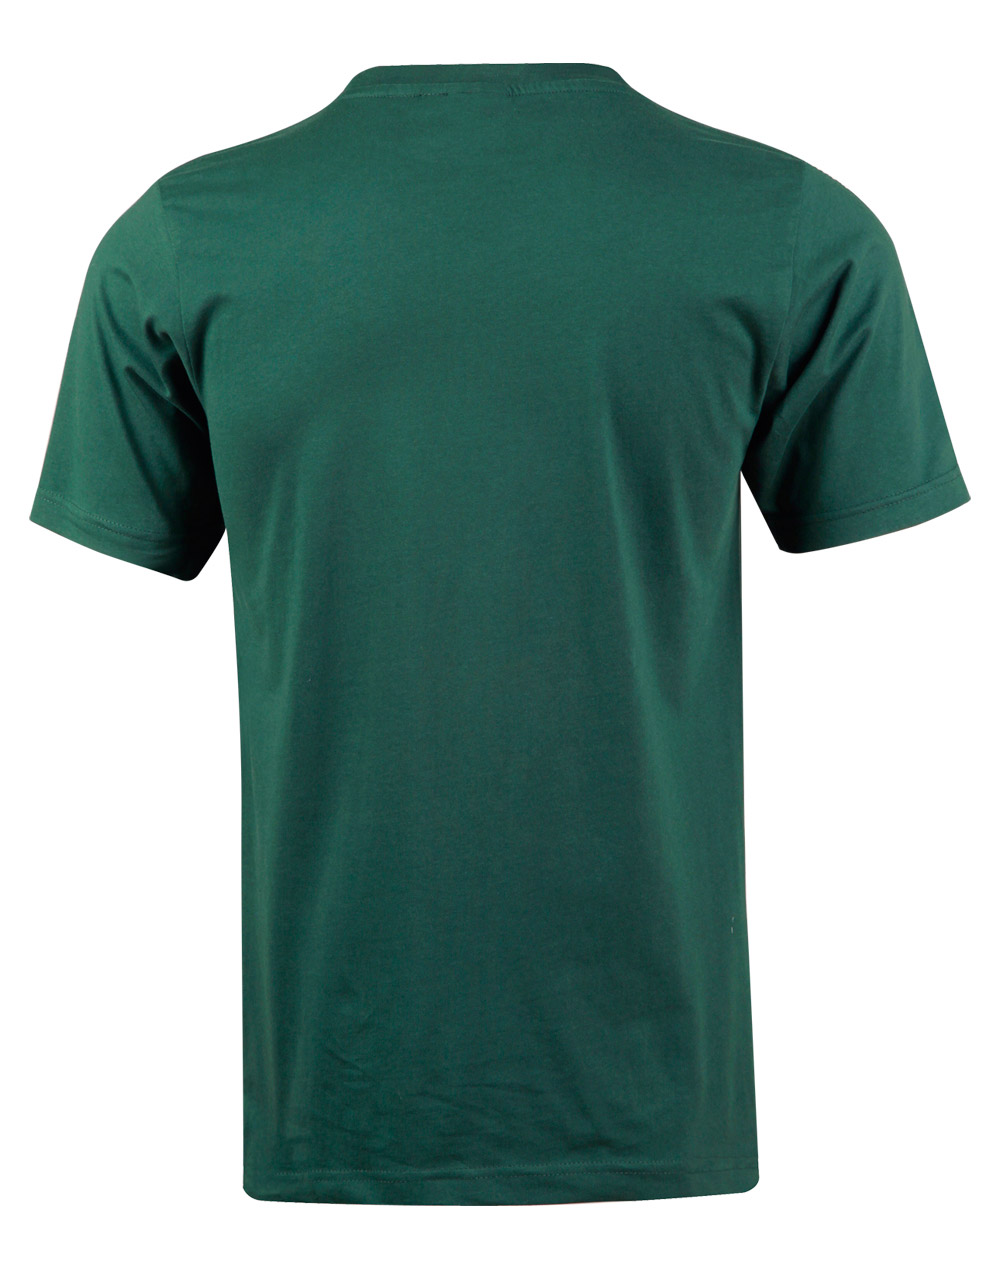 Custom (Royal) Semi-Fitted T-Shirts Men's Cotton Online in Perh Australia